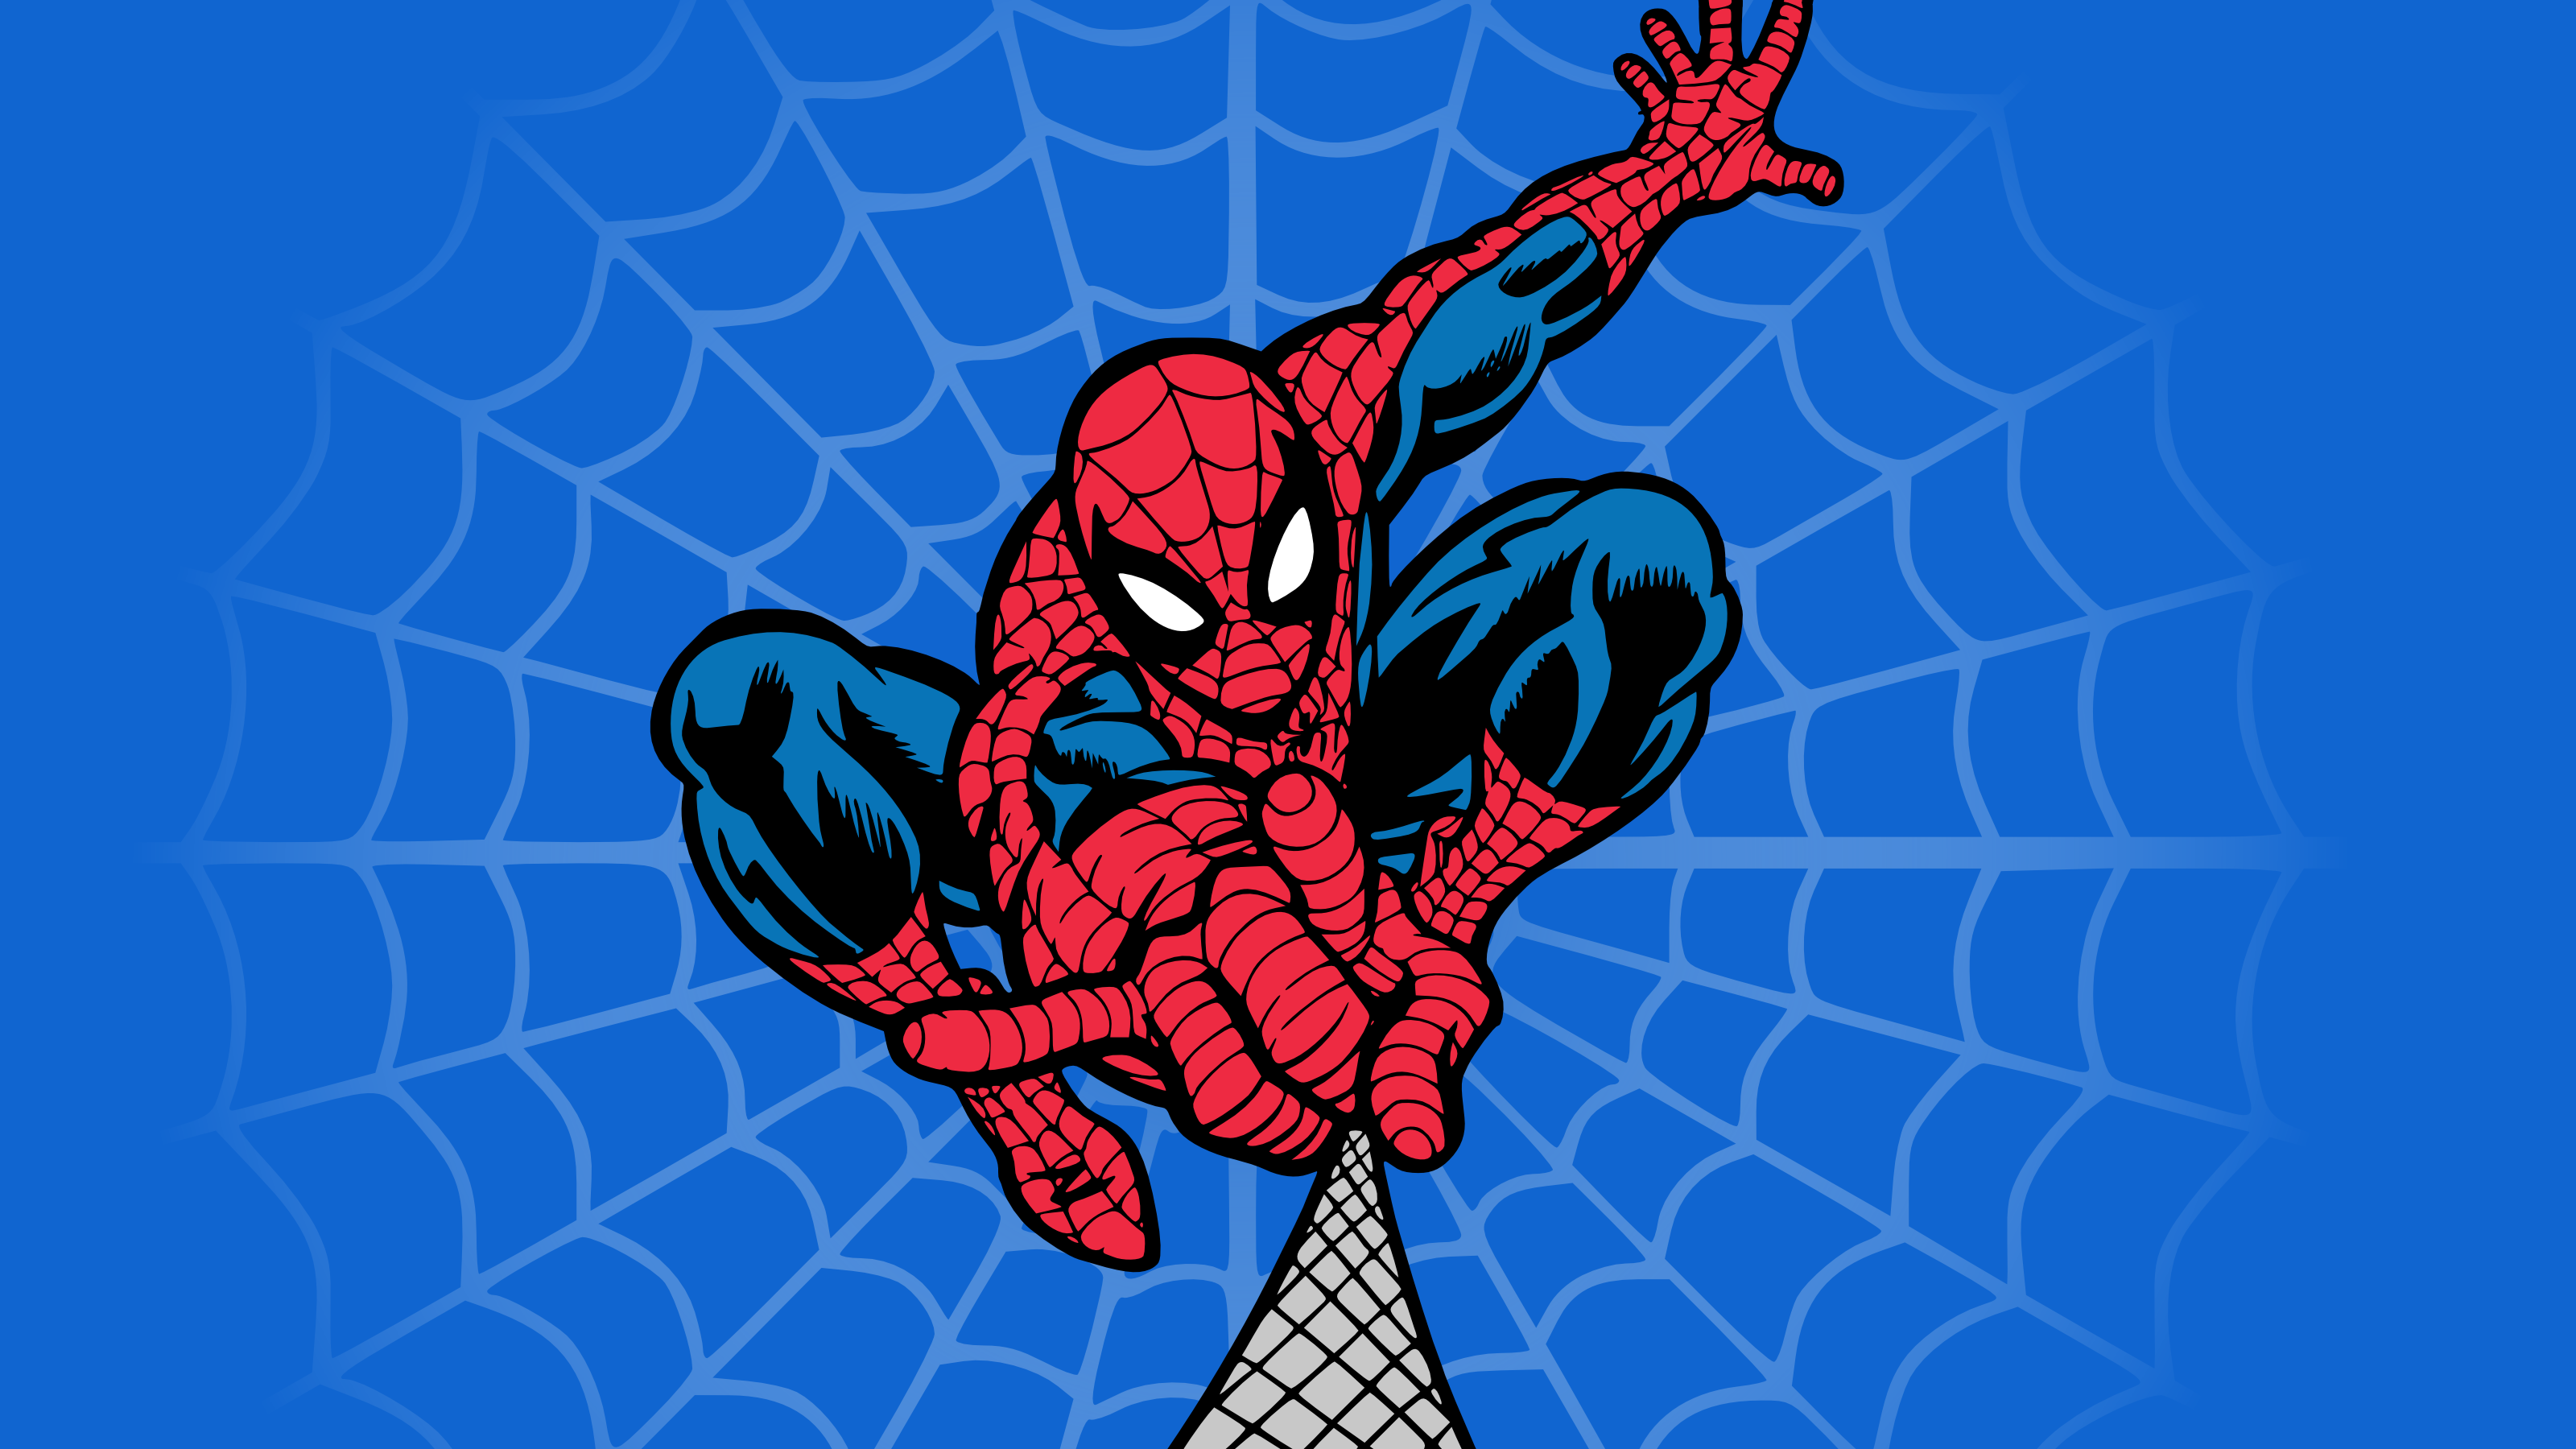 Spiderman comics spider man superhero wallpaper 3200x1800 39506